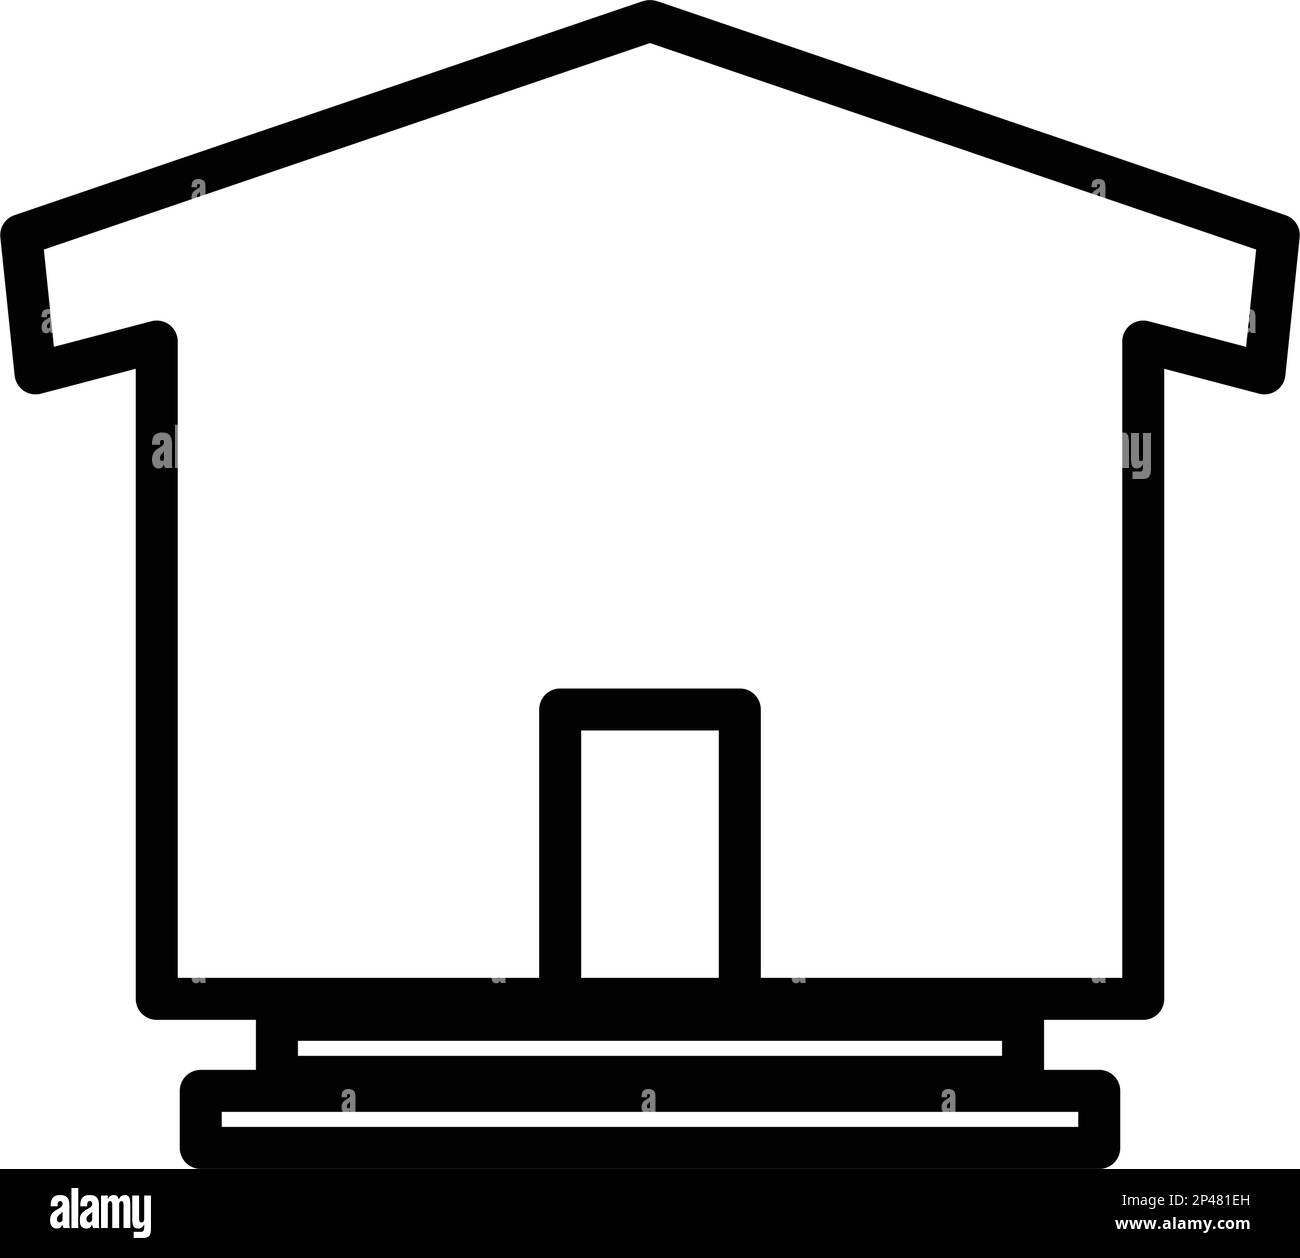 House icon clipart illustration design Stock Vector Image & Art - Alamy